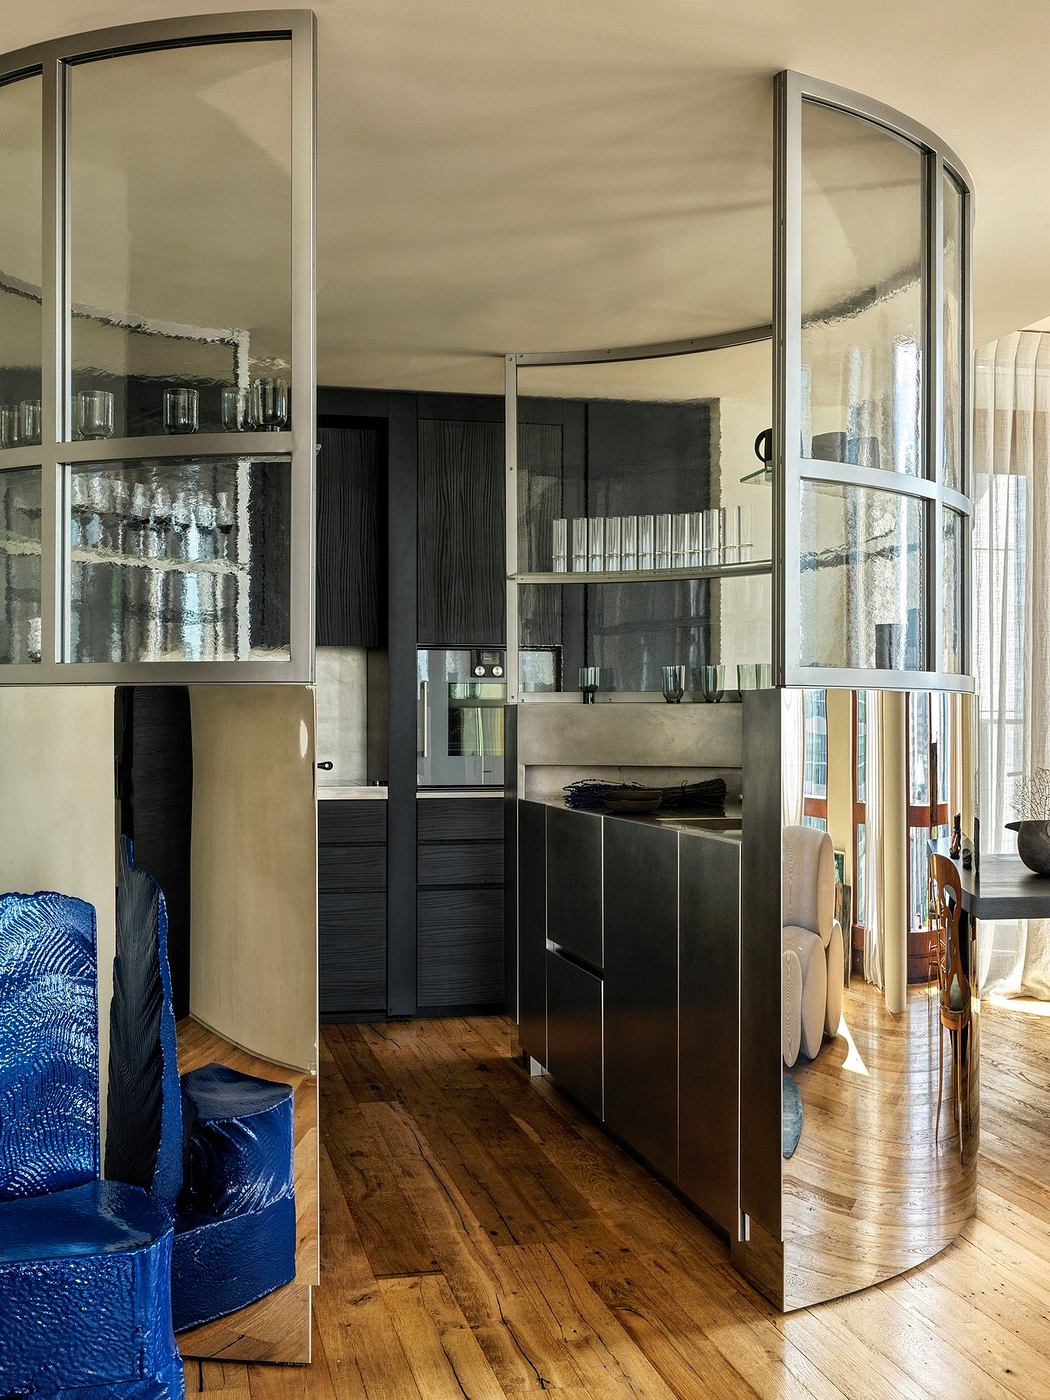 Modern kitchen seen through curved glass doors with wooden flooring.